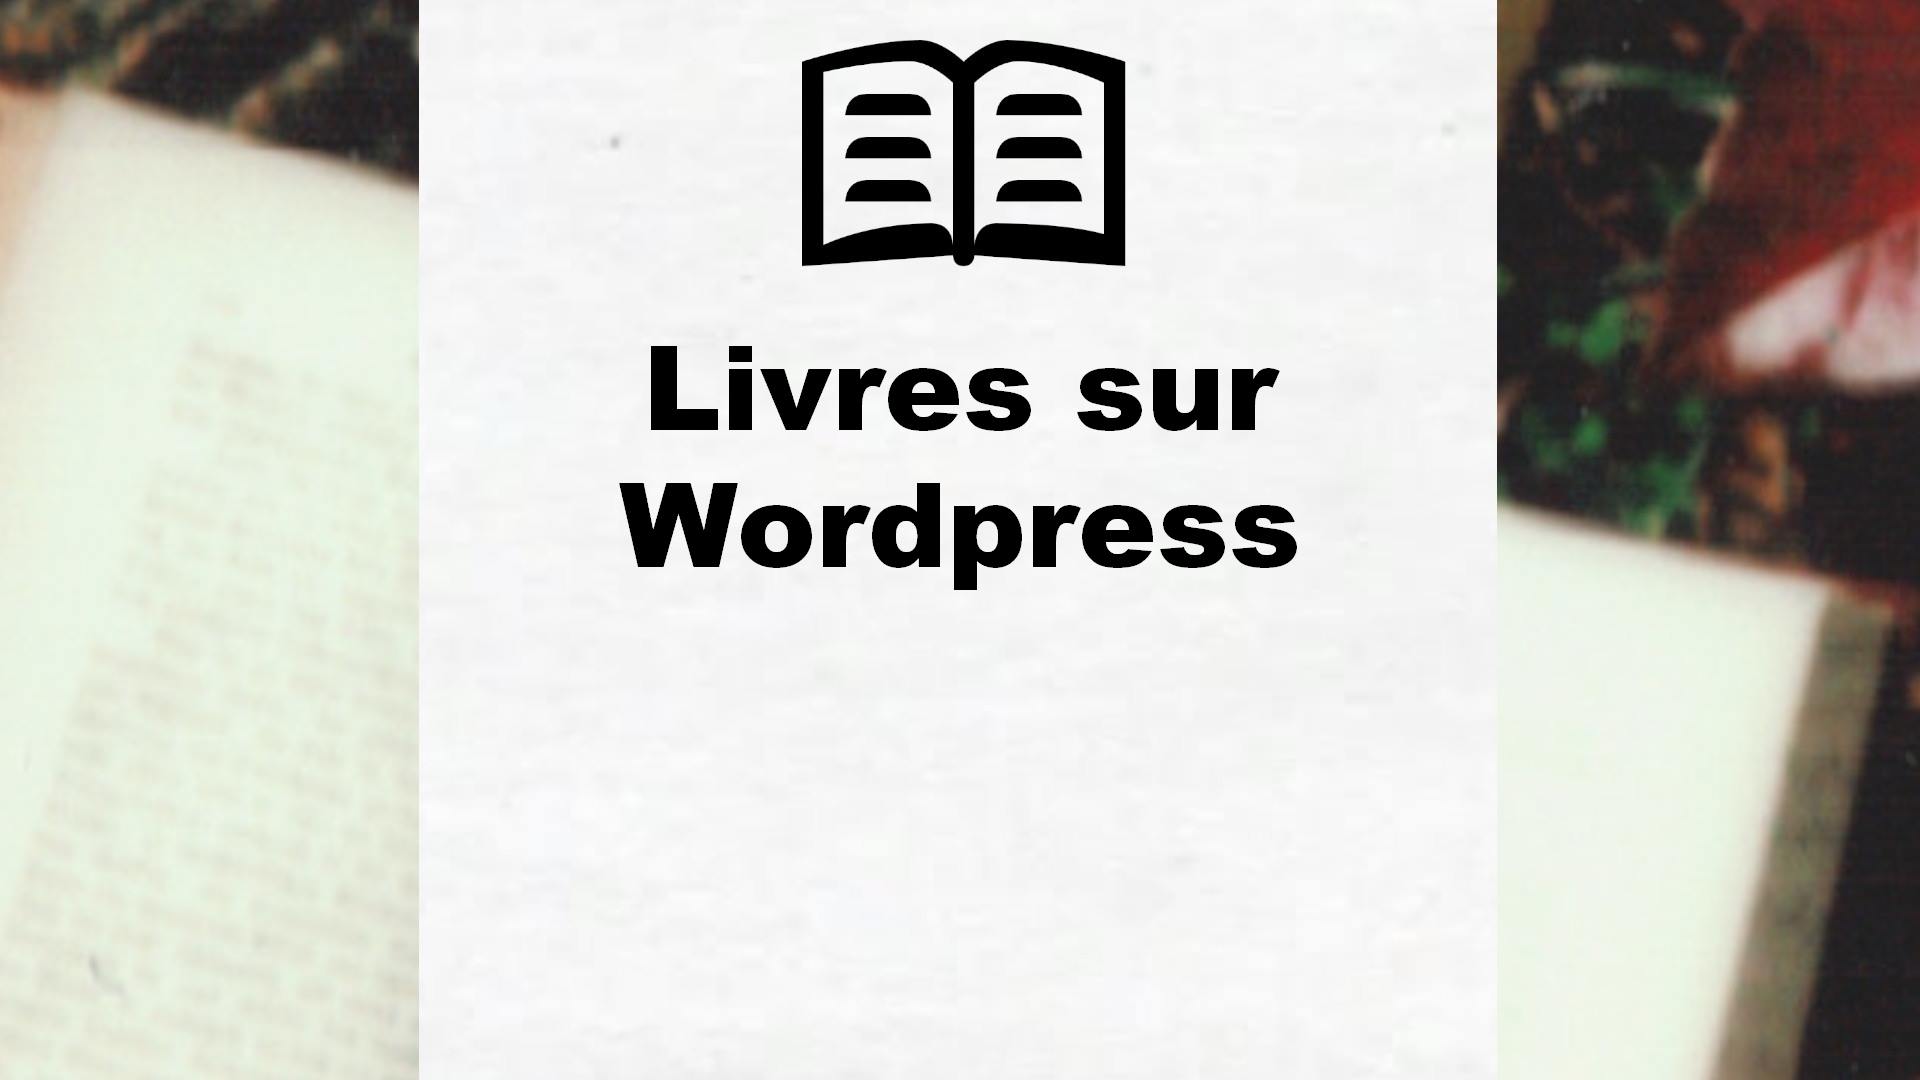 Livres sur WordPress